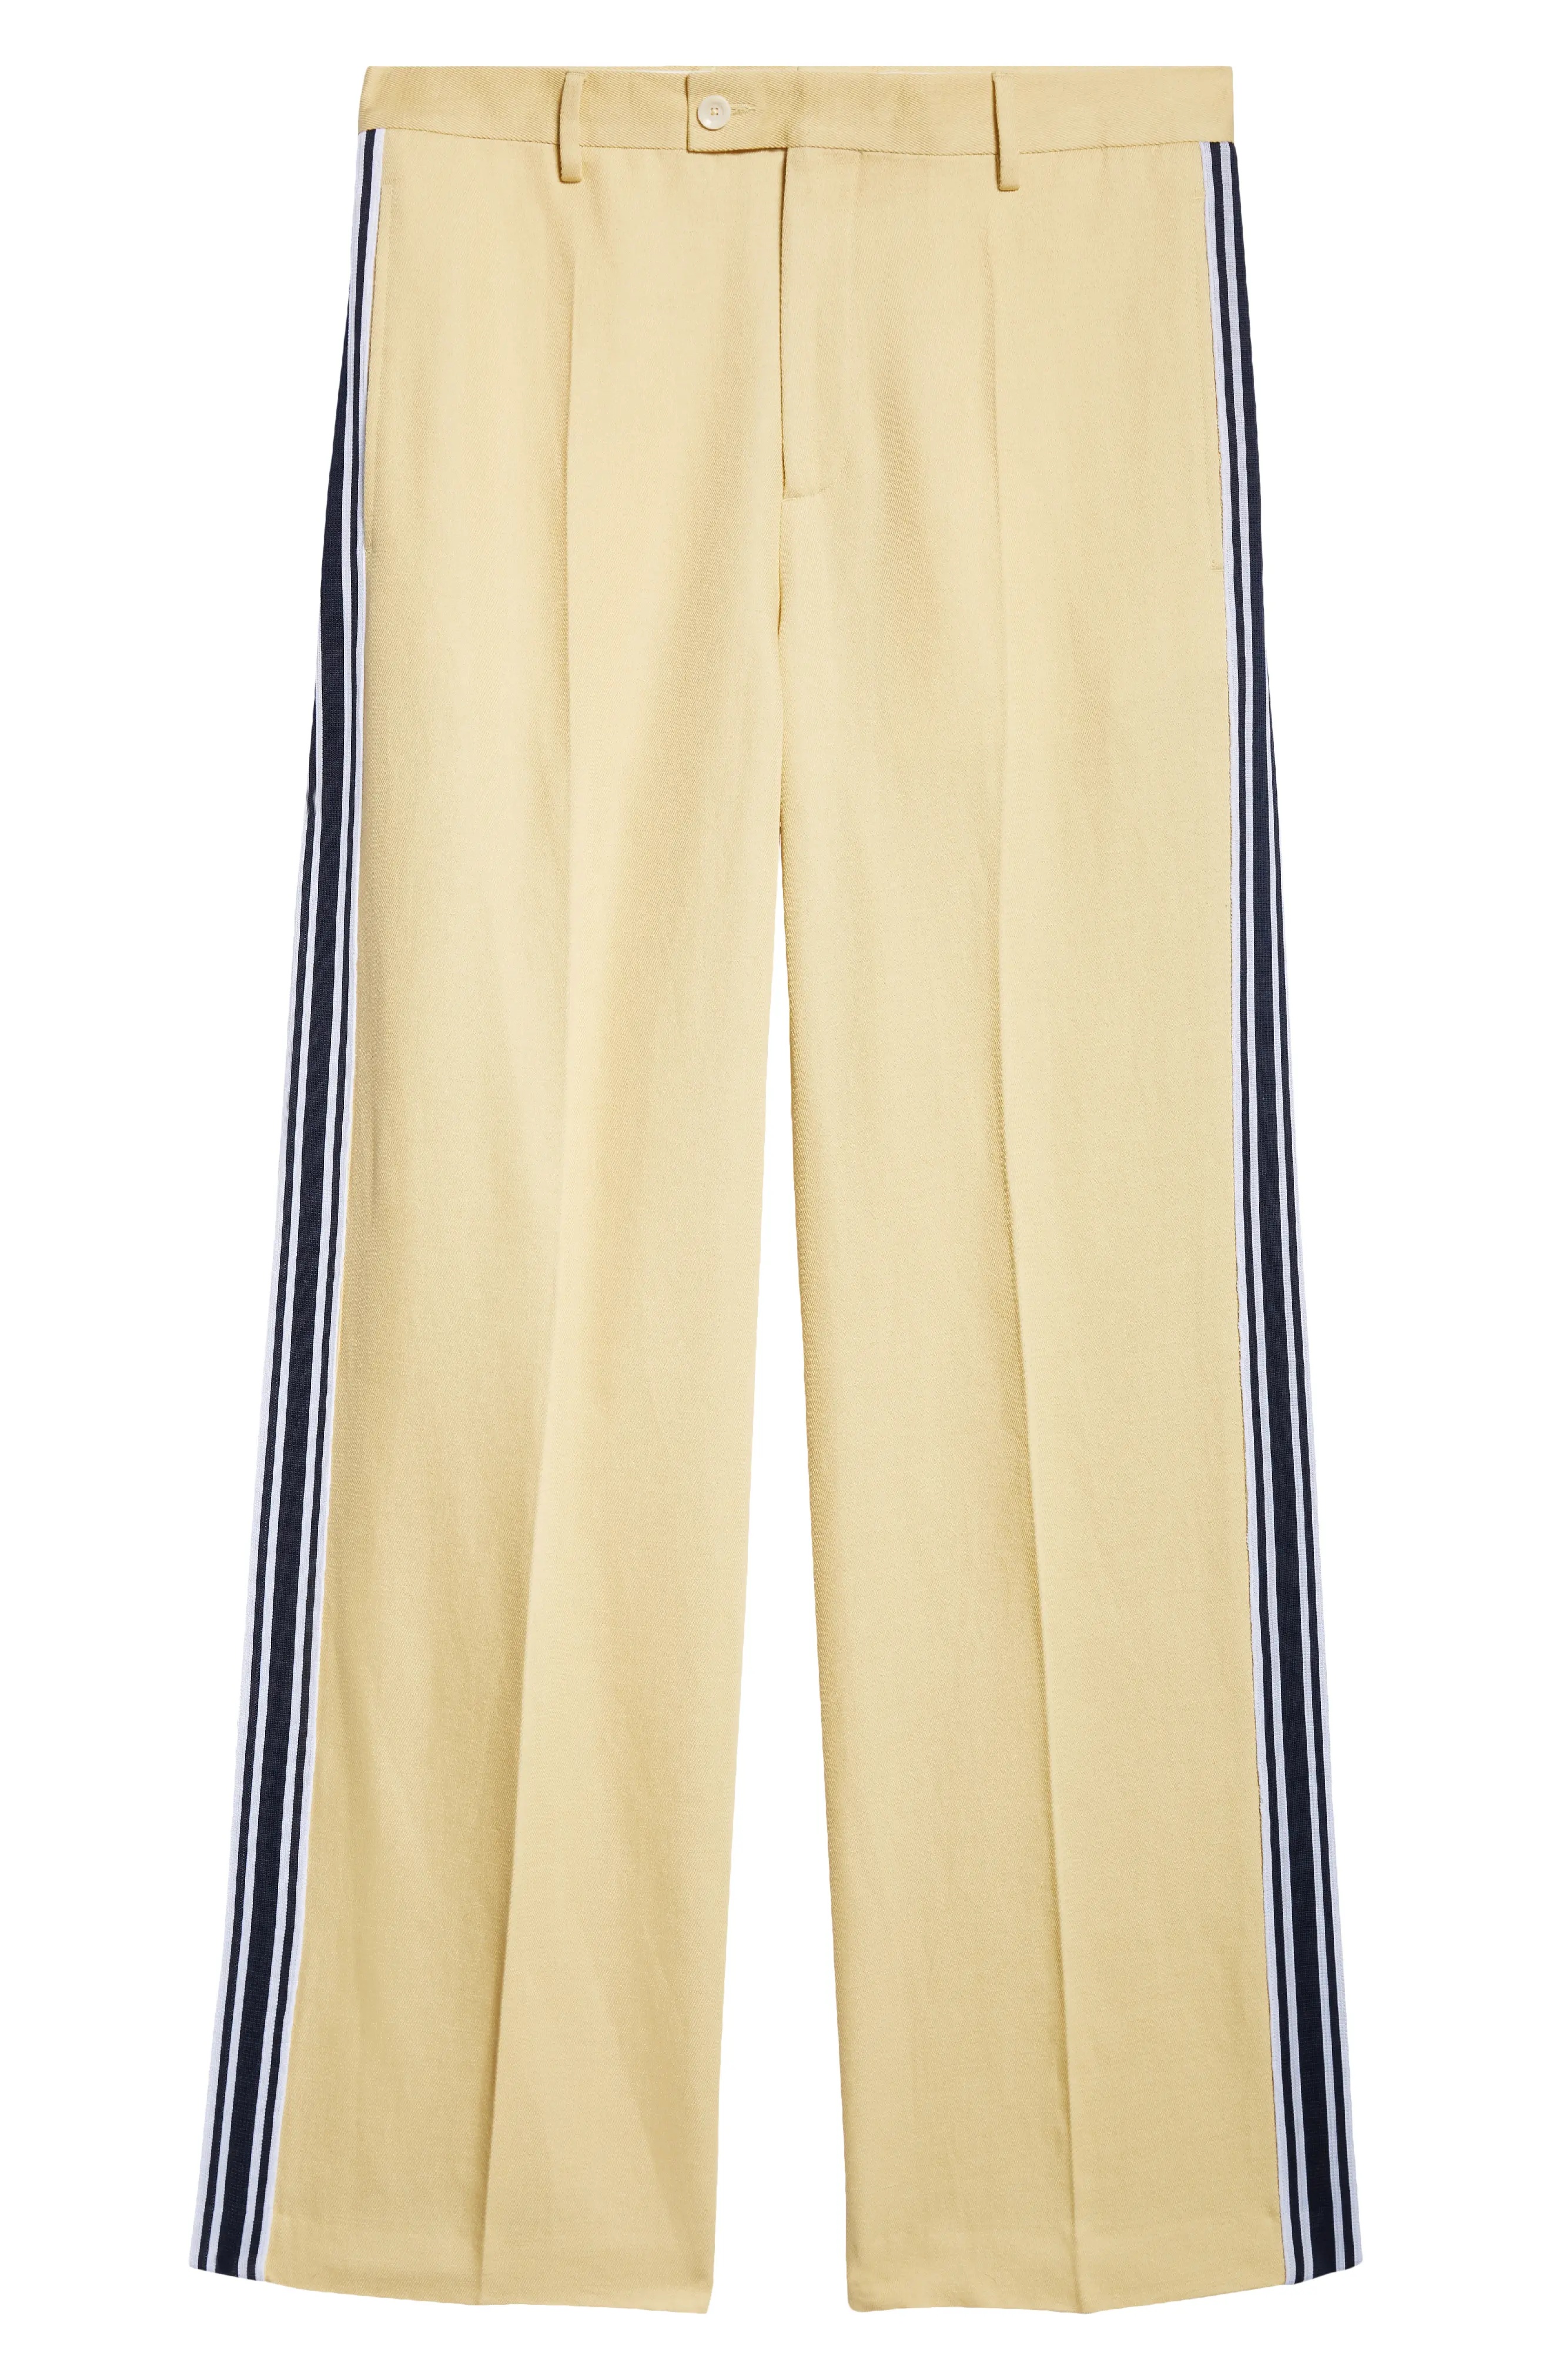 Constant Track Stripe Cotton & Linen Trousers - 6